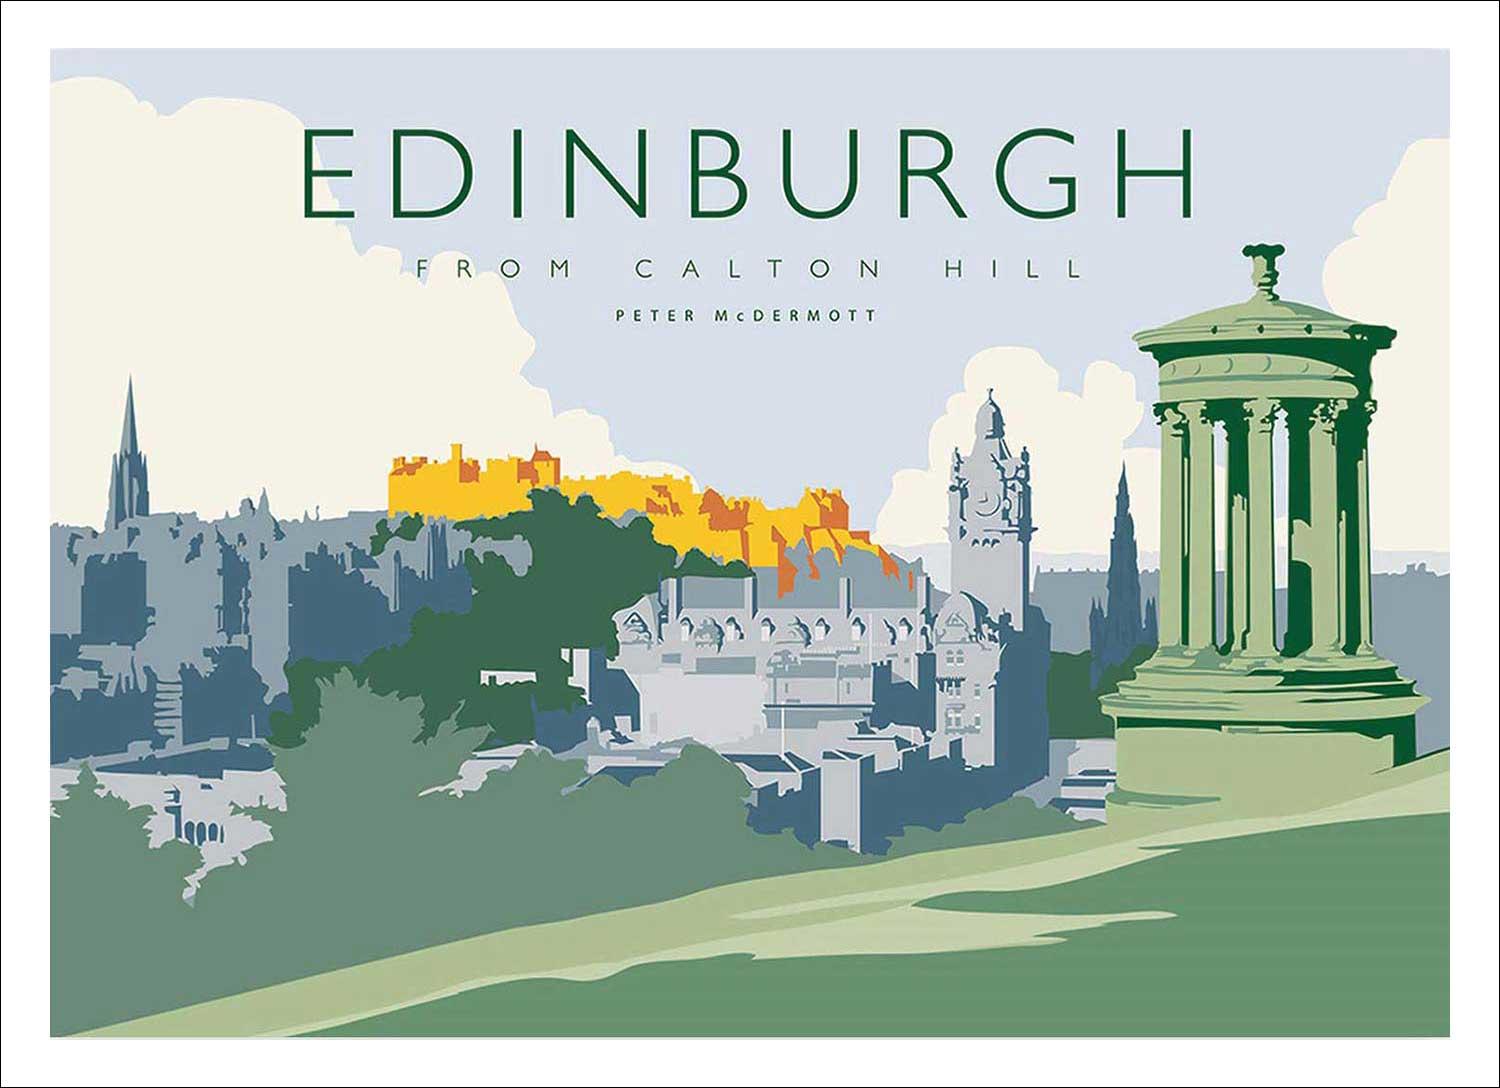 Edinburgh from Calton Hill Art Print from an original illustration by artist Peter McDermott